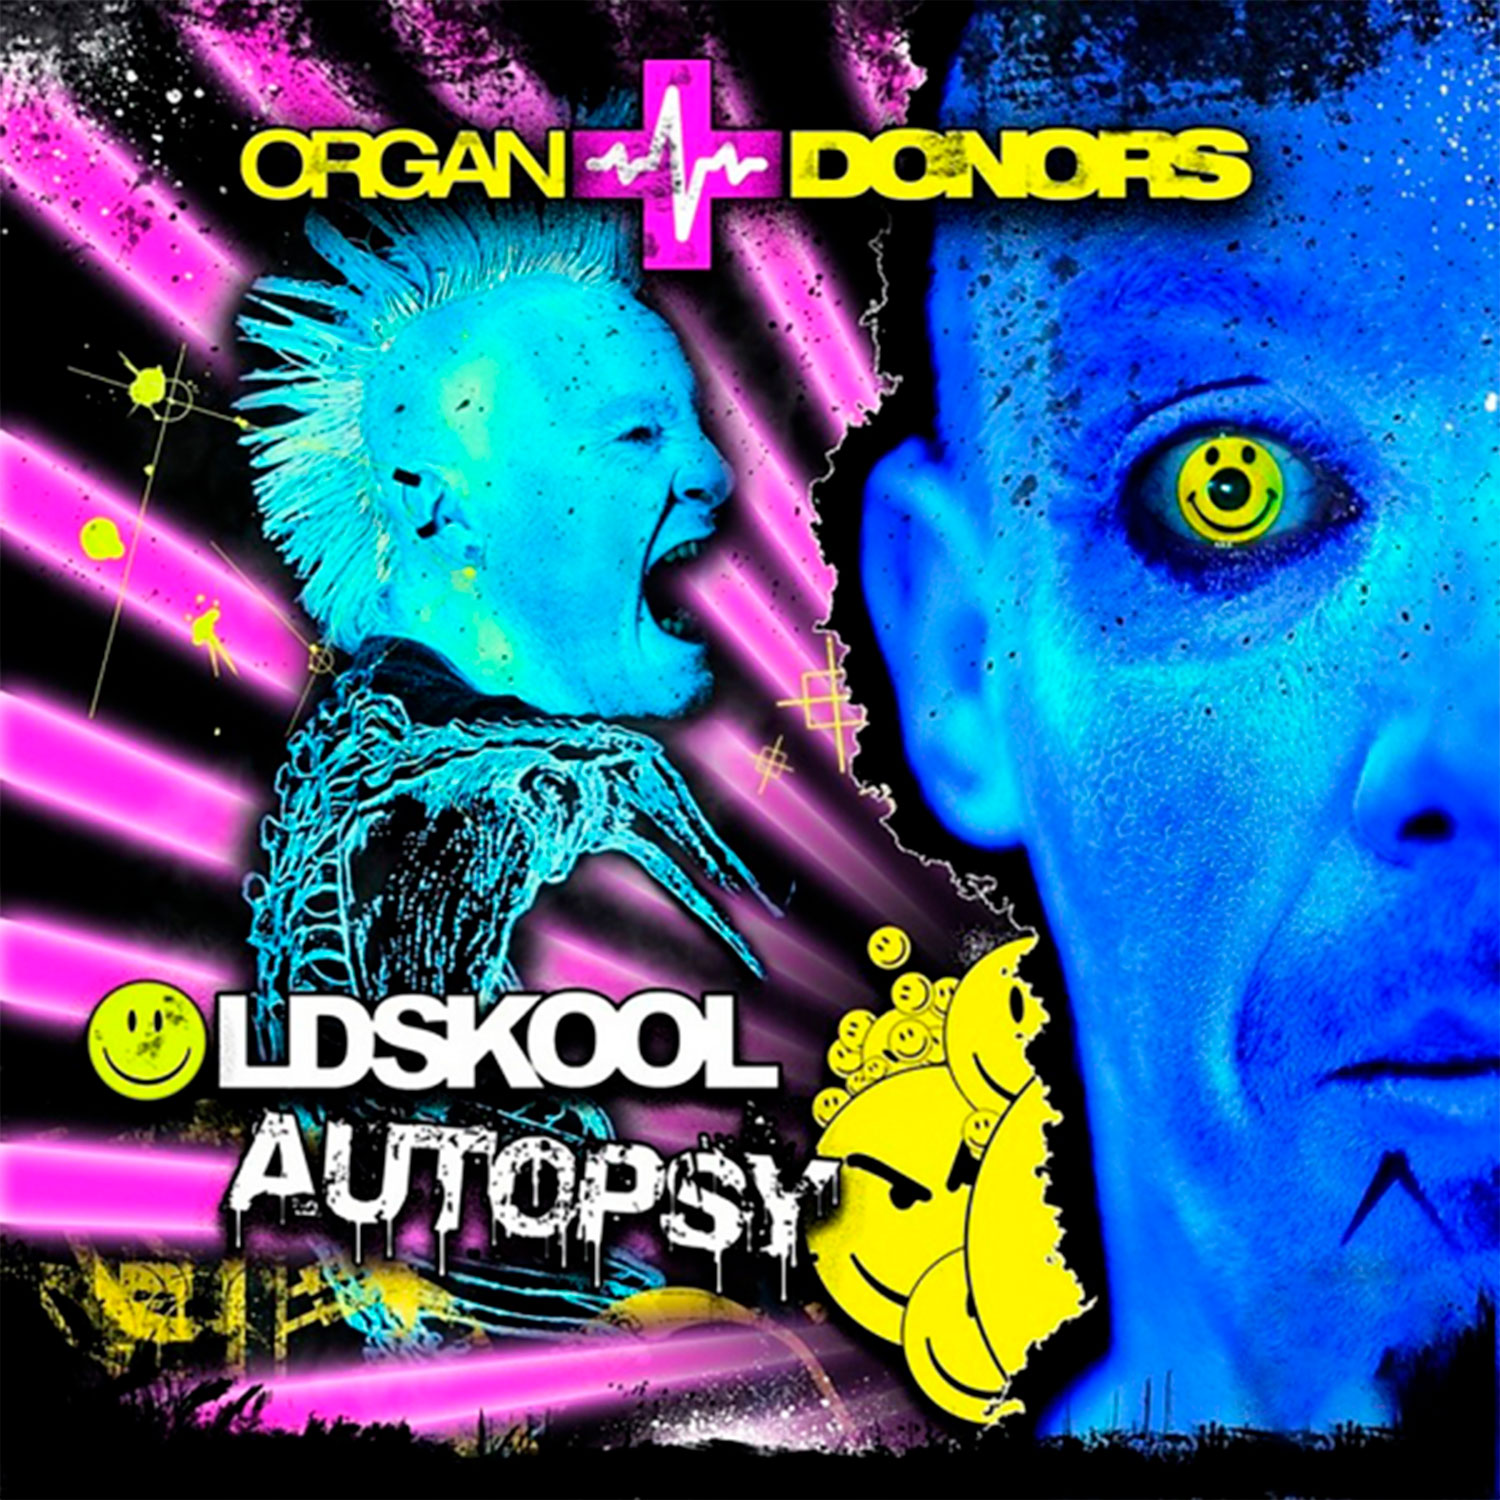 Oldskool Autopsy - Organ Donors